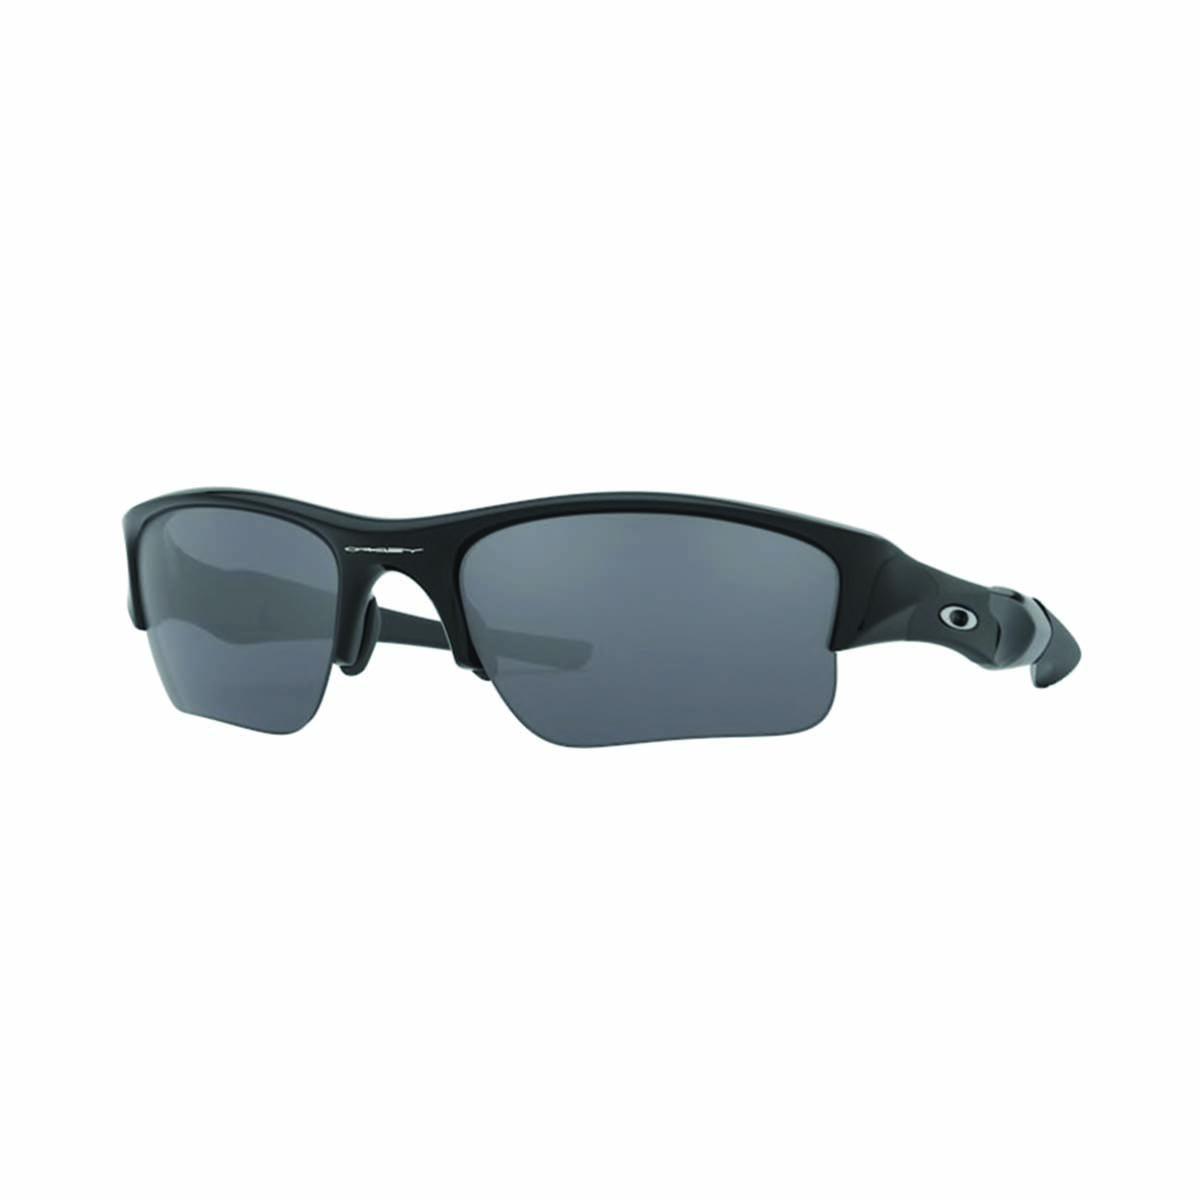 FLAK JACKET XLJ 03-915 0OO9009 Sunglasses Get Them At Eyes on Brickell